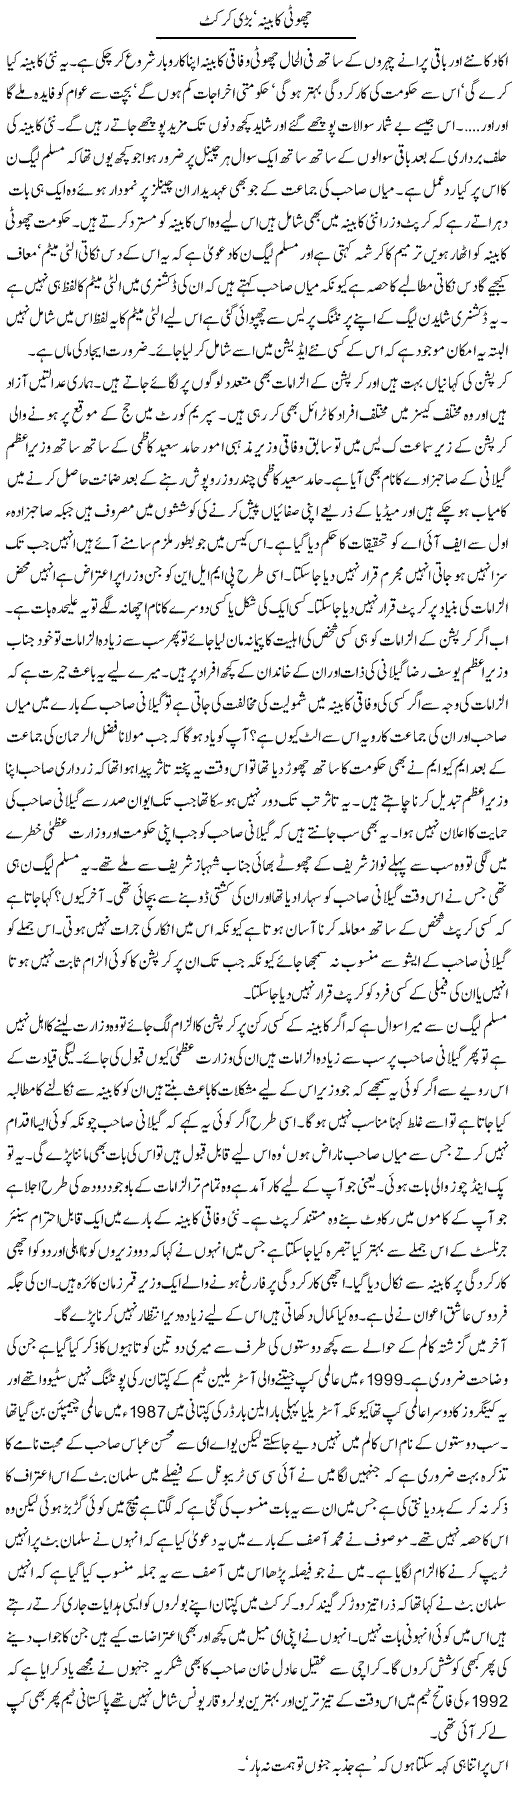 Cabinet and Cricket Express Column Iyaz Khan 15 February 2011